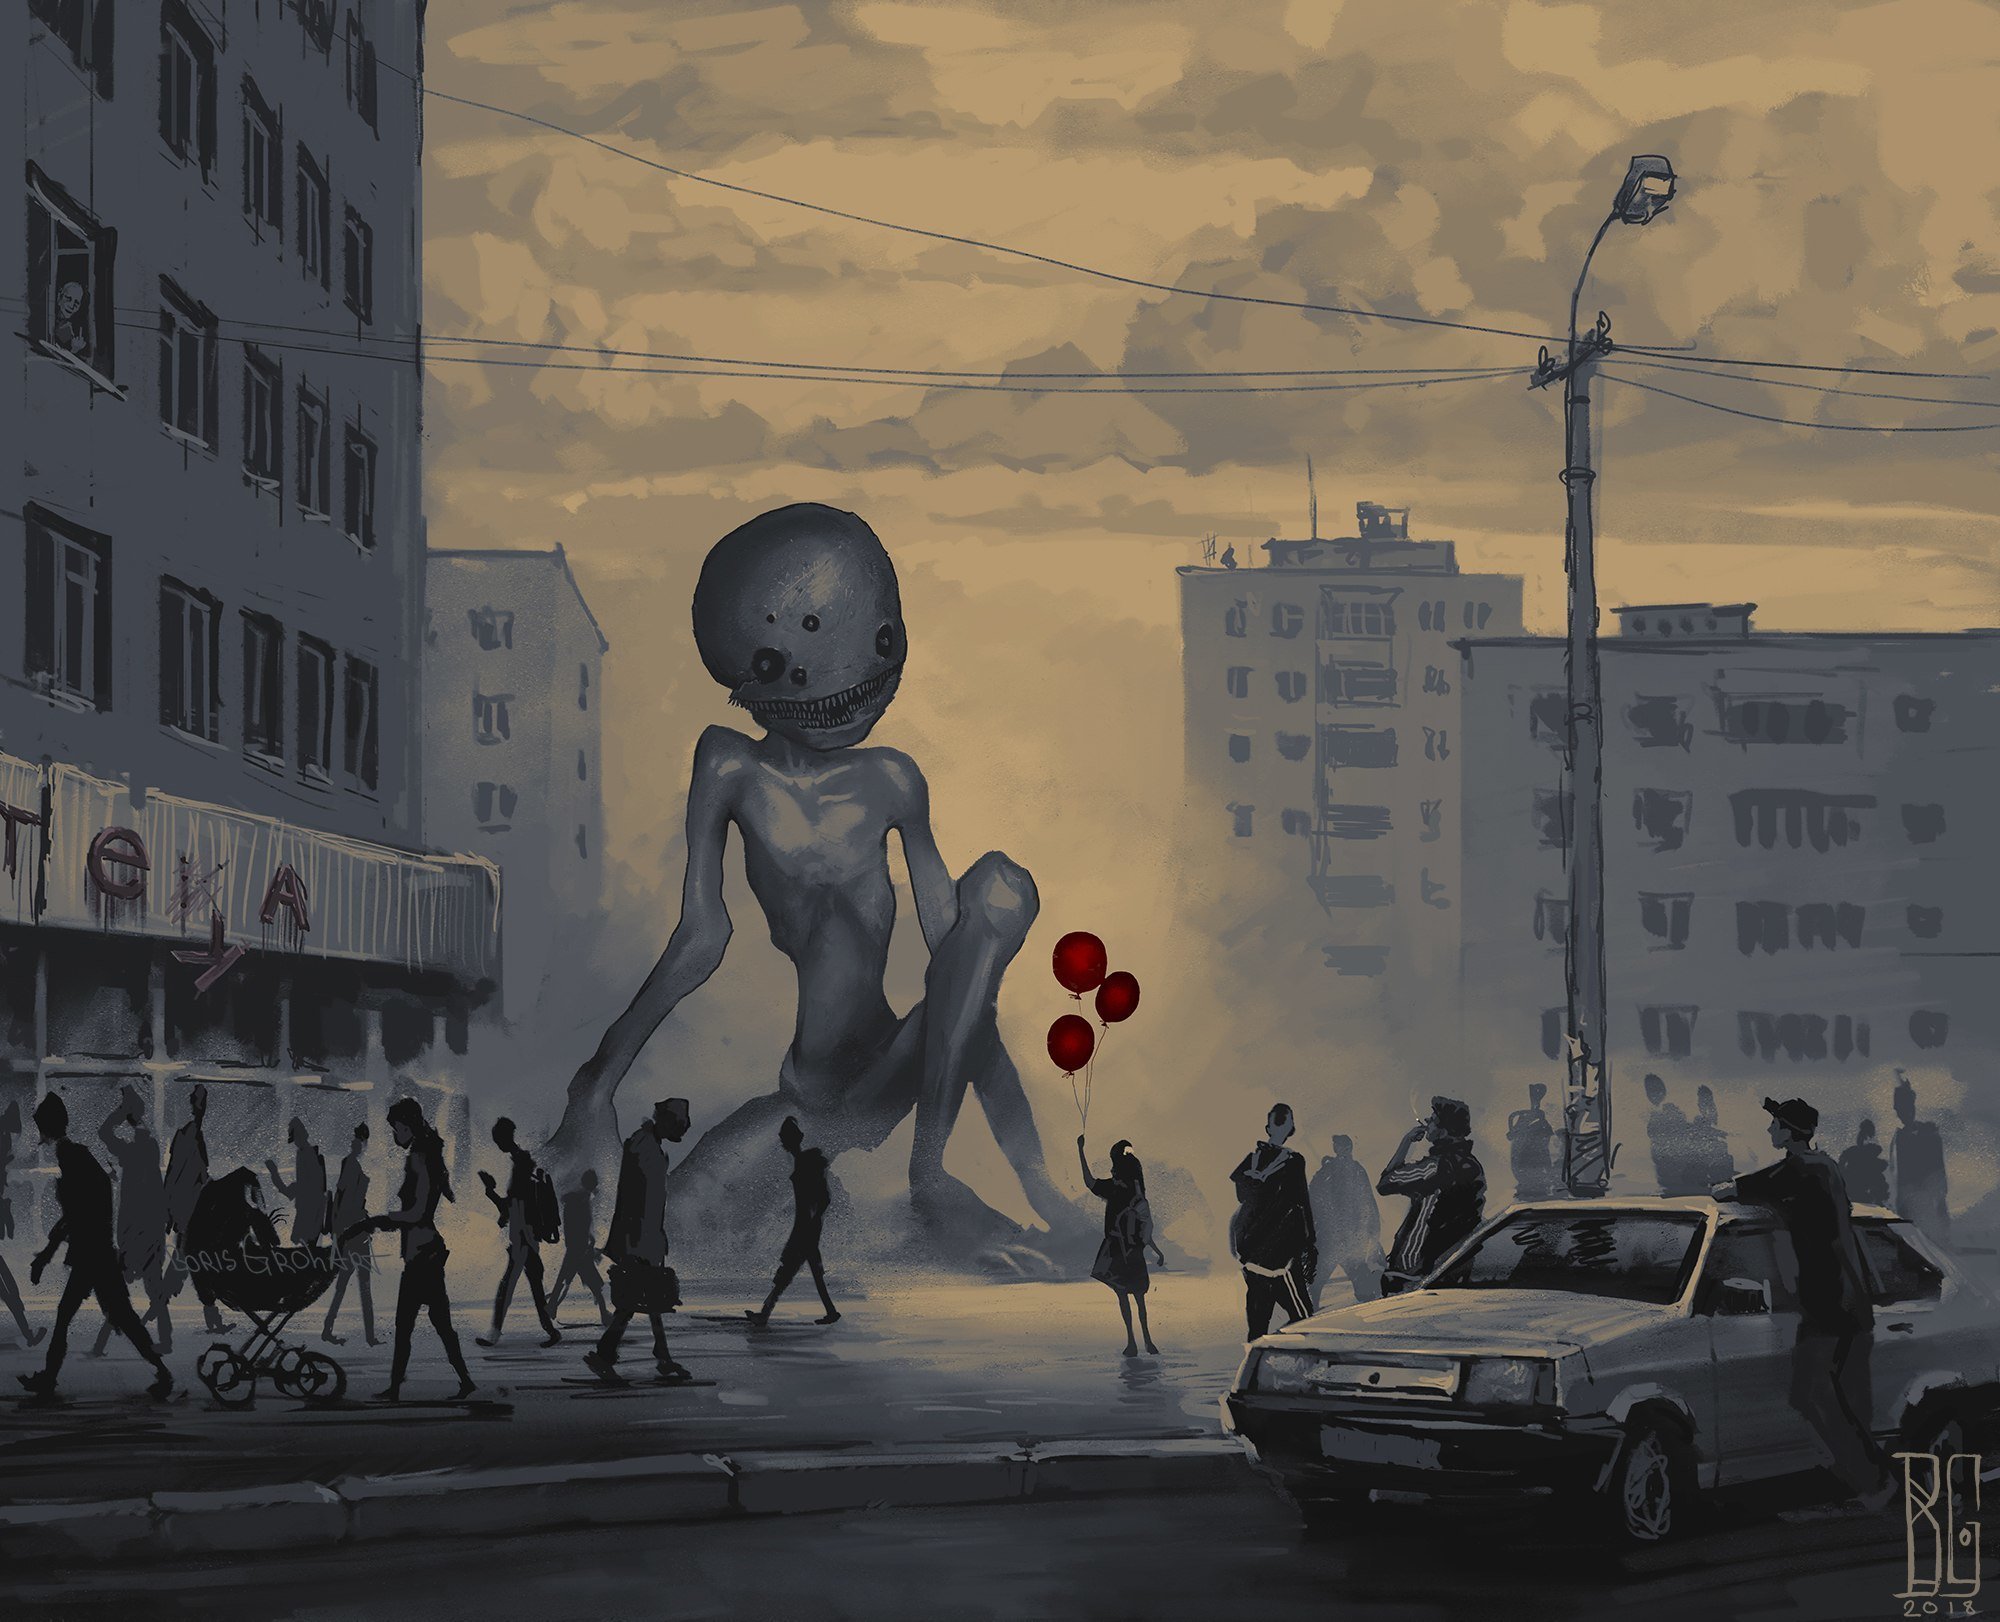 General 2000x1622 creepy creature giant city balloon Boris Groh LADA digital art 2018 (year) watermarked Russia